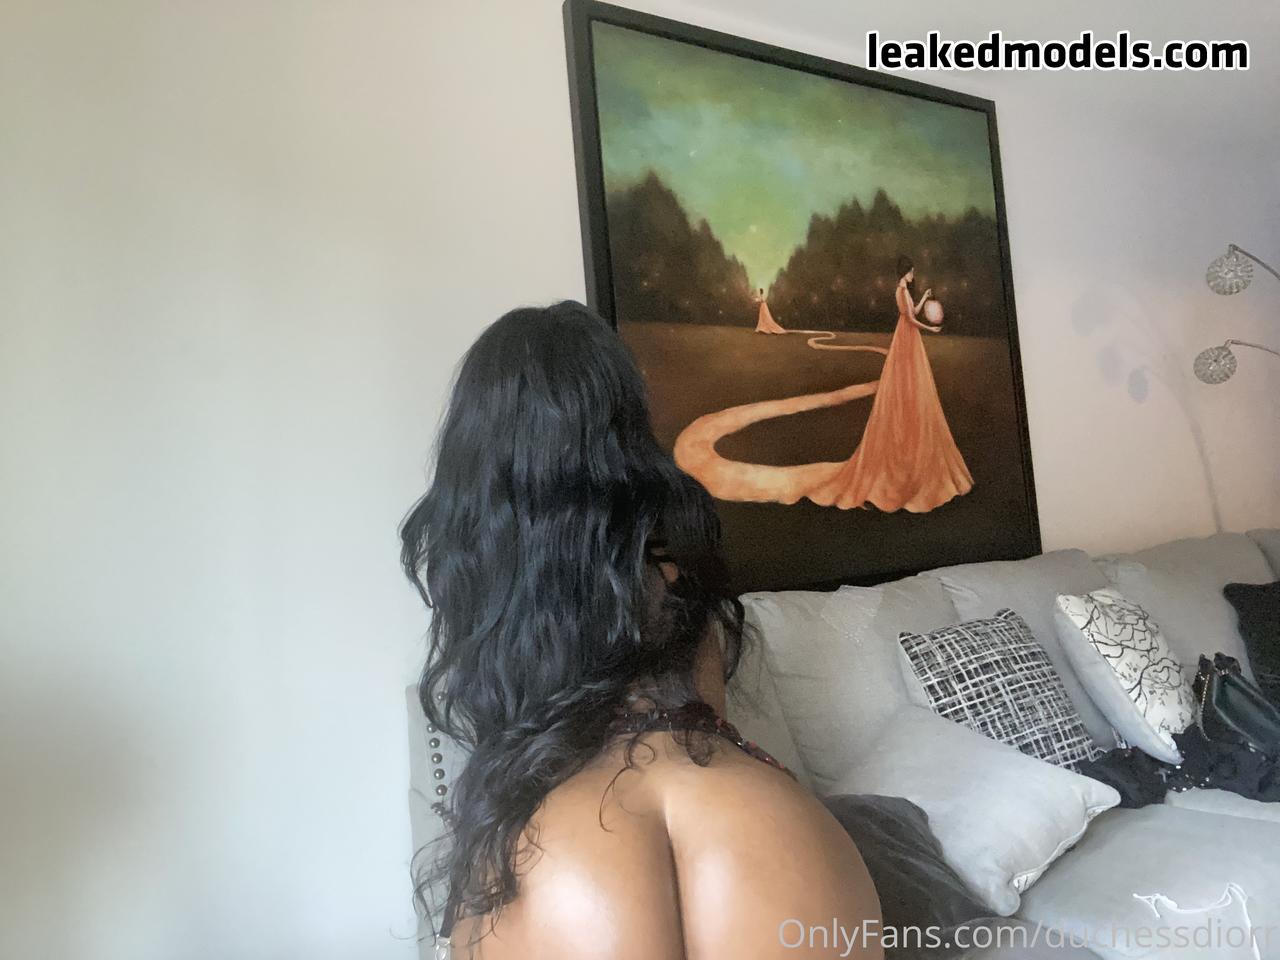 Duchess Diorr nude leaks leakedmodels.com 014 - Duchess Diorr Nude (15 Photos + 2 Videos)